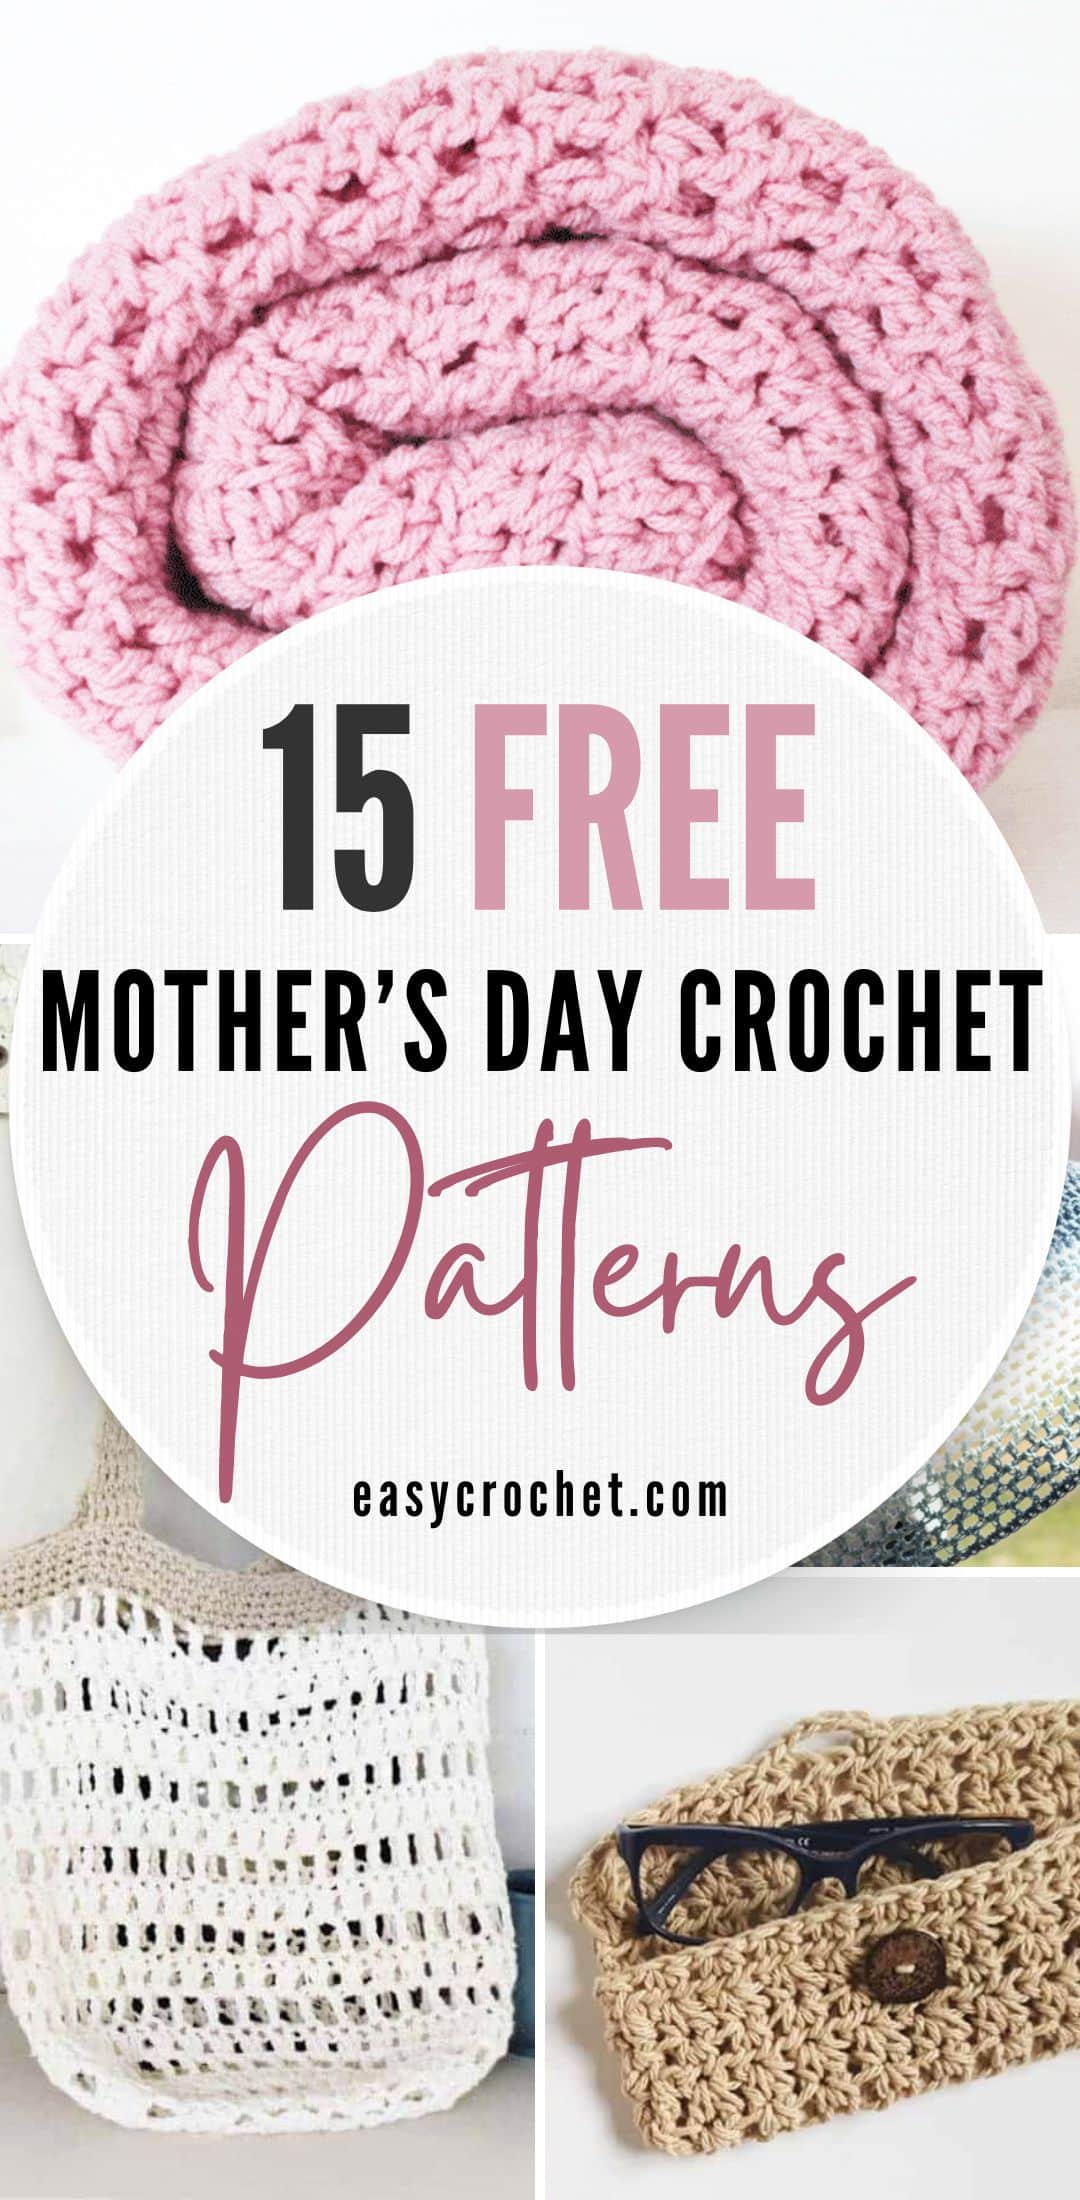 Mother's Day crochet gift pattern idea s